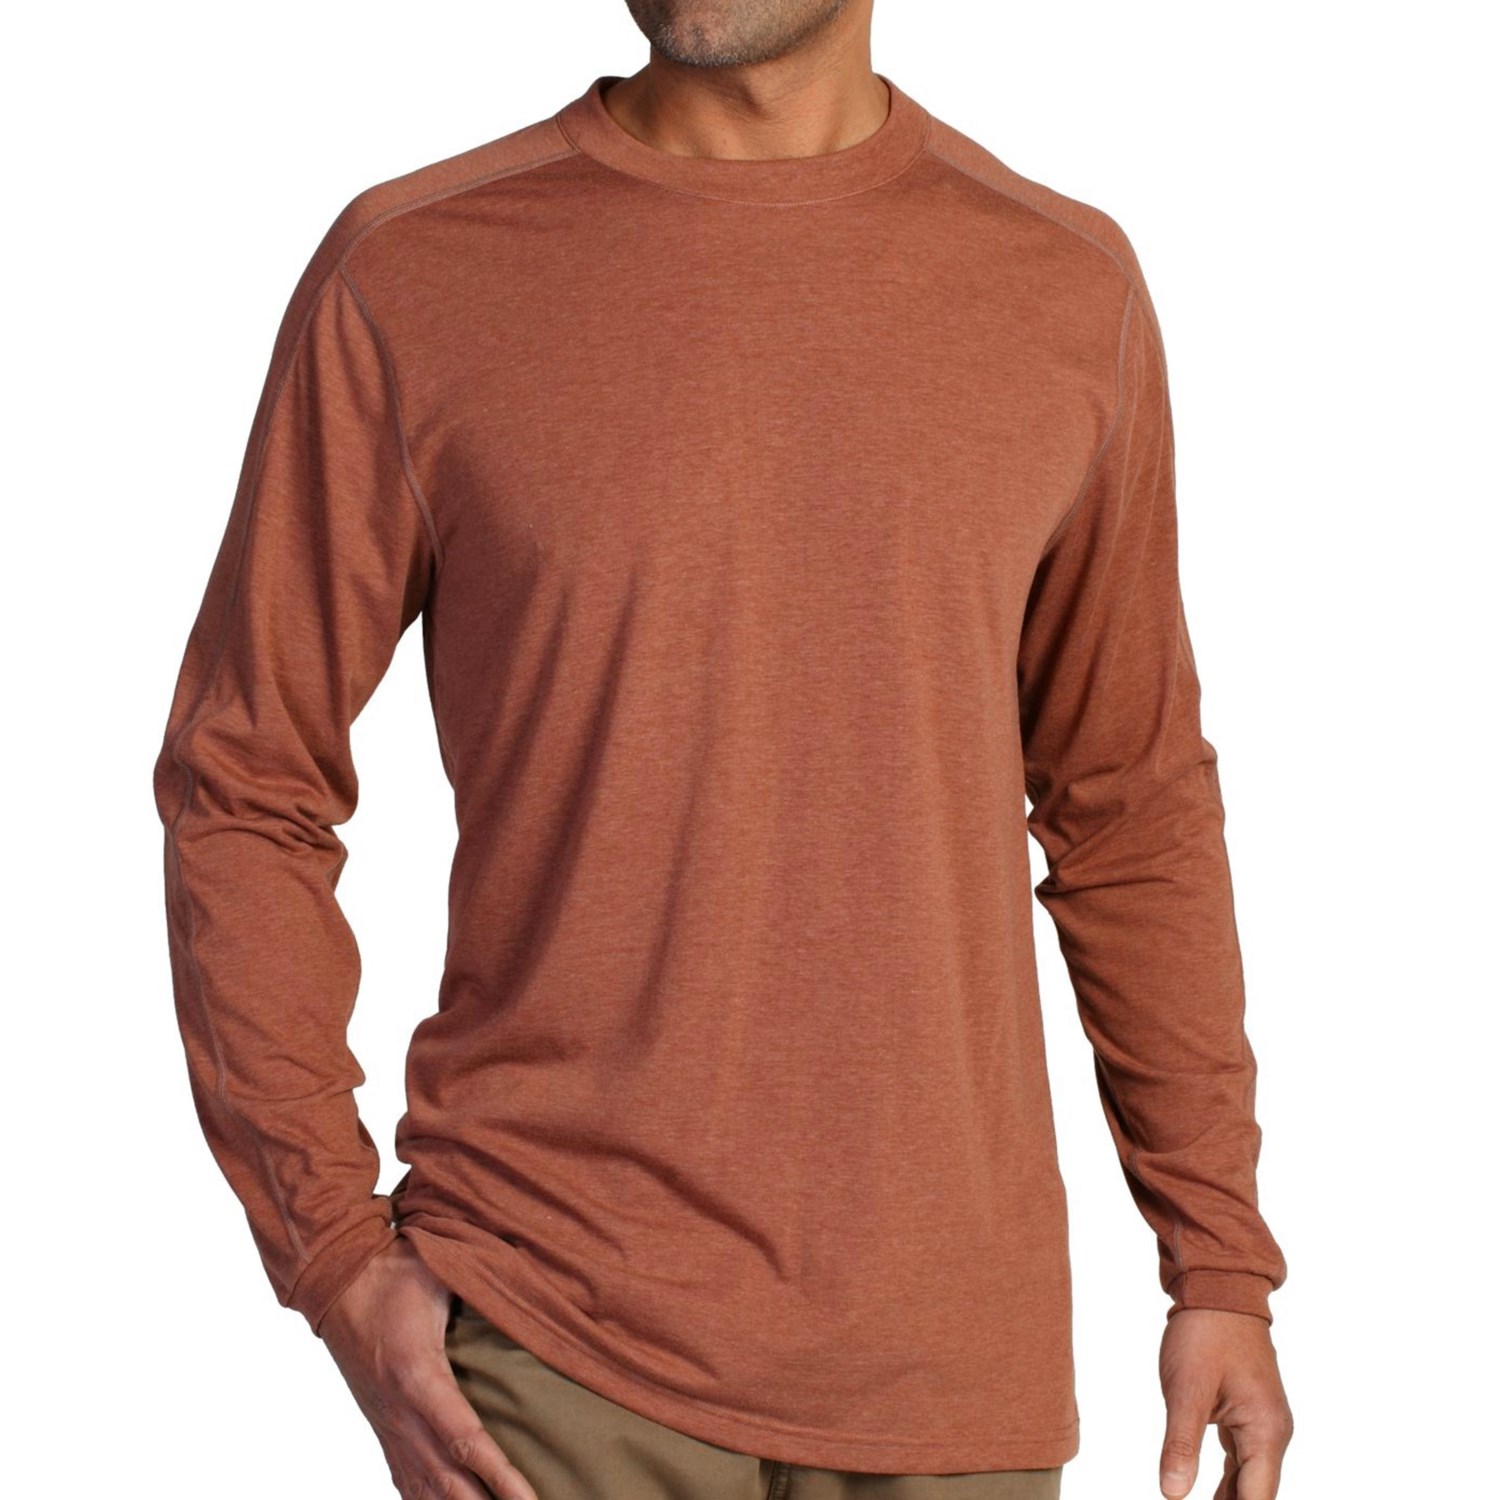 ExOfficio ExO Dri Crew T-Shirt - Long Sleeve (For Men) in Sepia